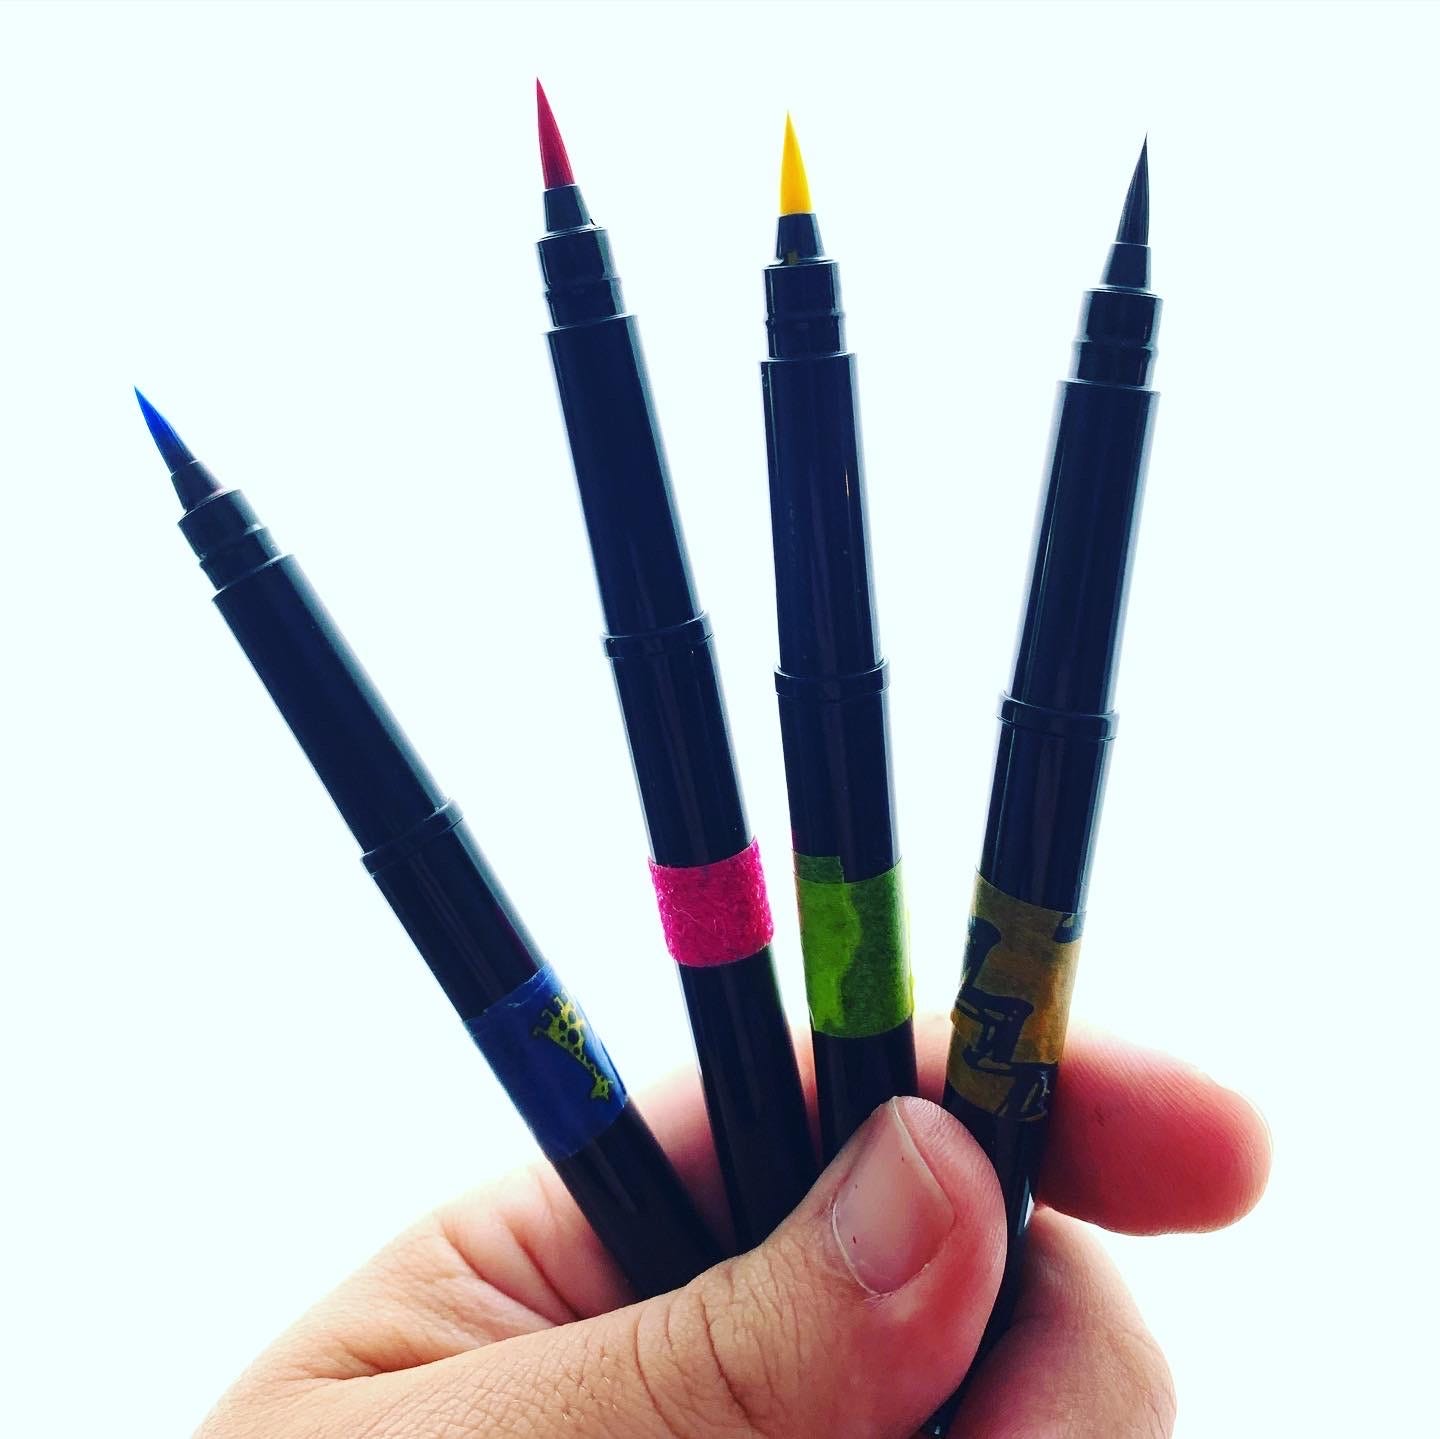 Pentel Arts Pocket Brush Refills, Black Ink, Value Set of 12